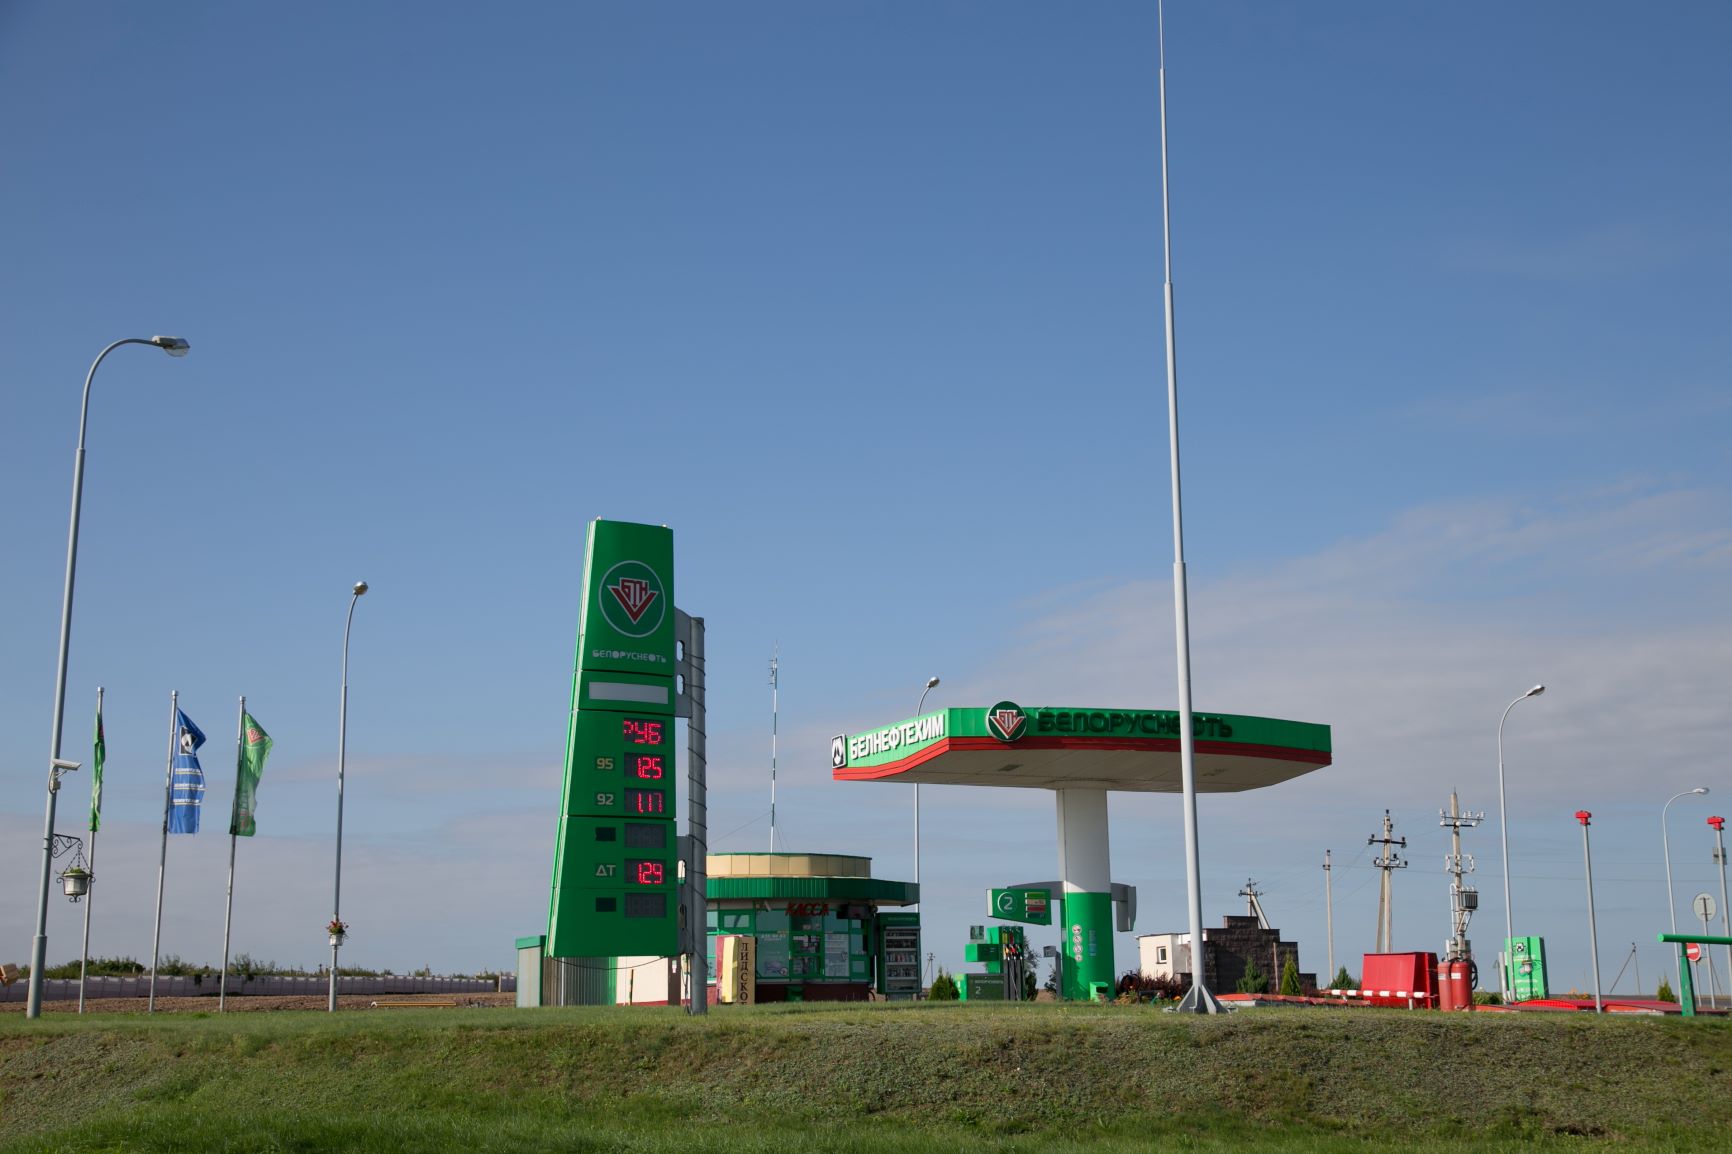 gas station №43 "Belorusneft